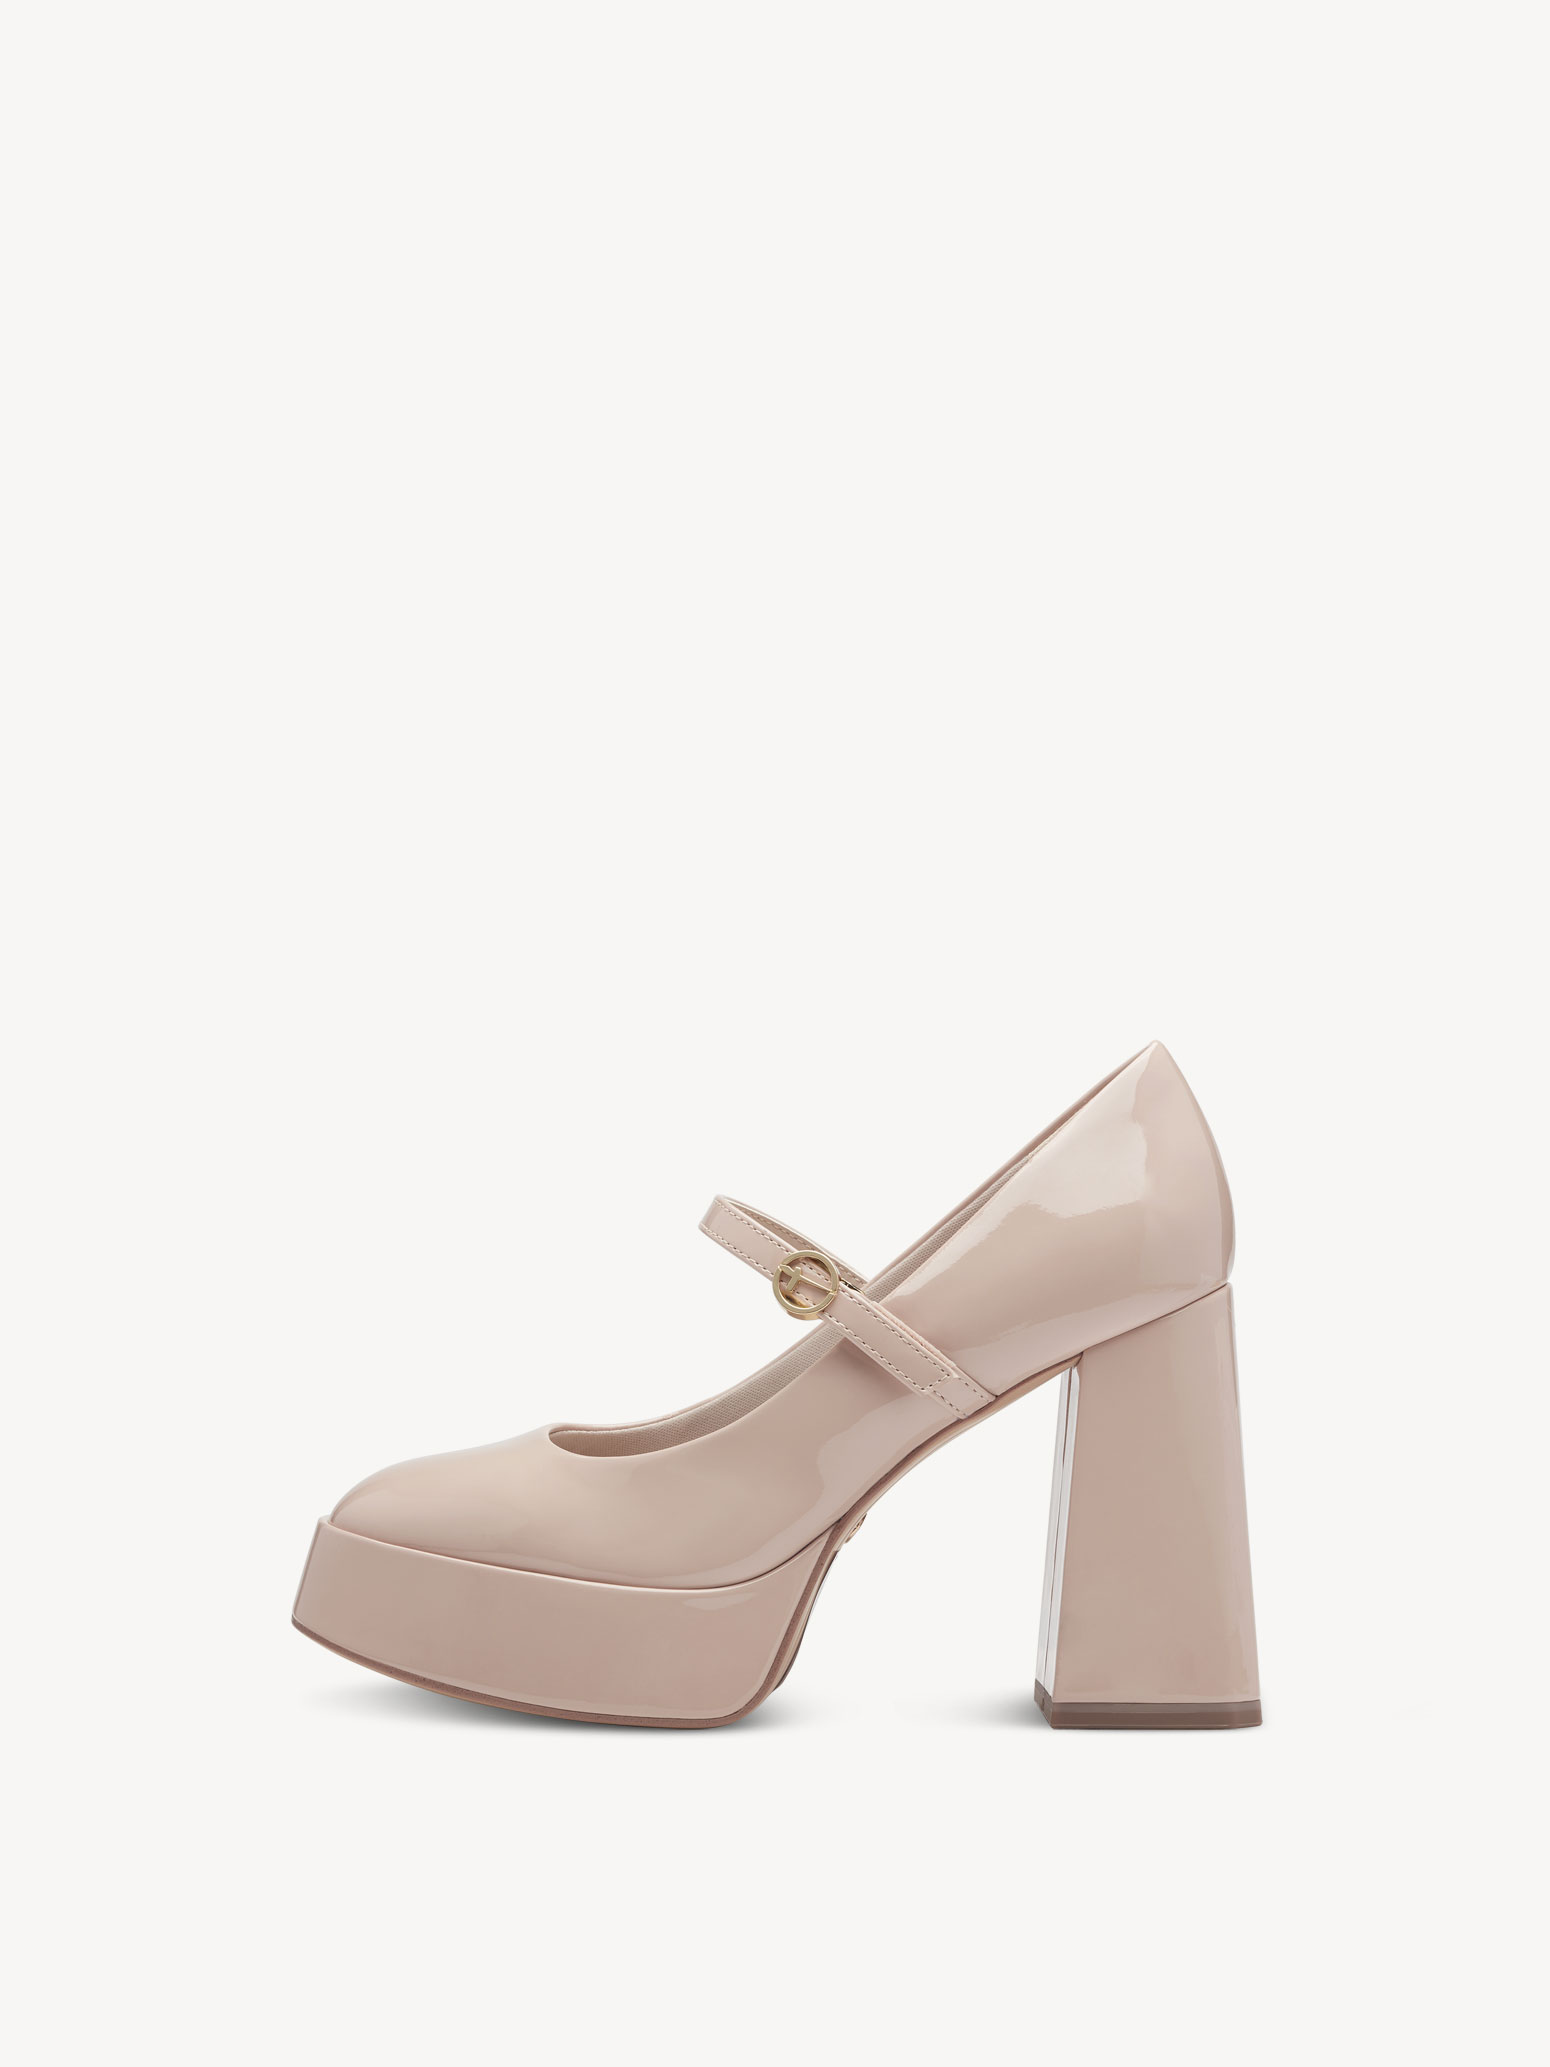 Trotteur - rose 1-1-24417-20-508: Buy Tamaris Low shoes & Slippers online!